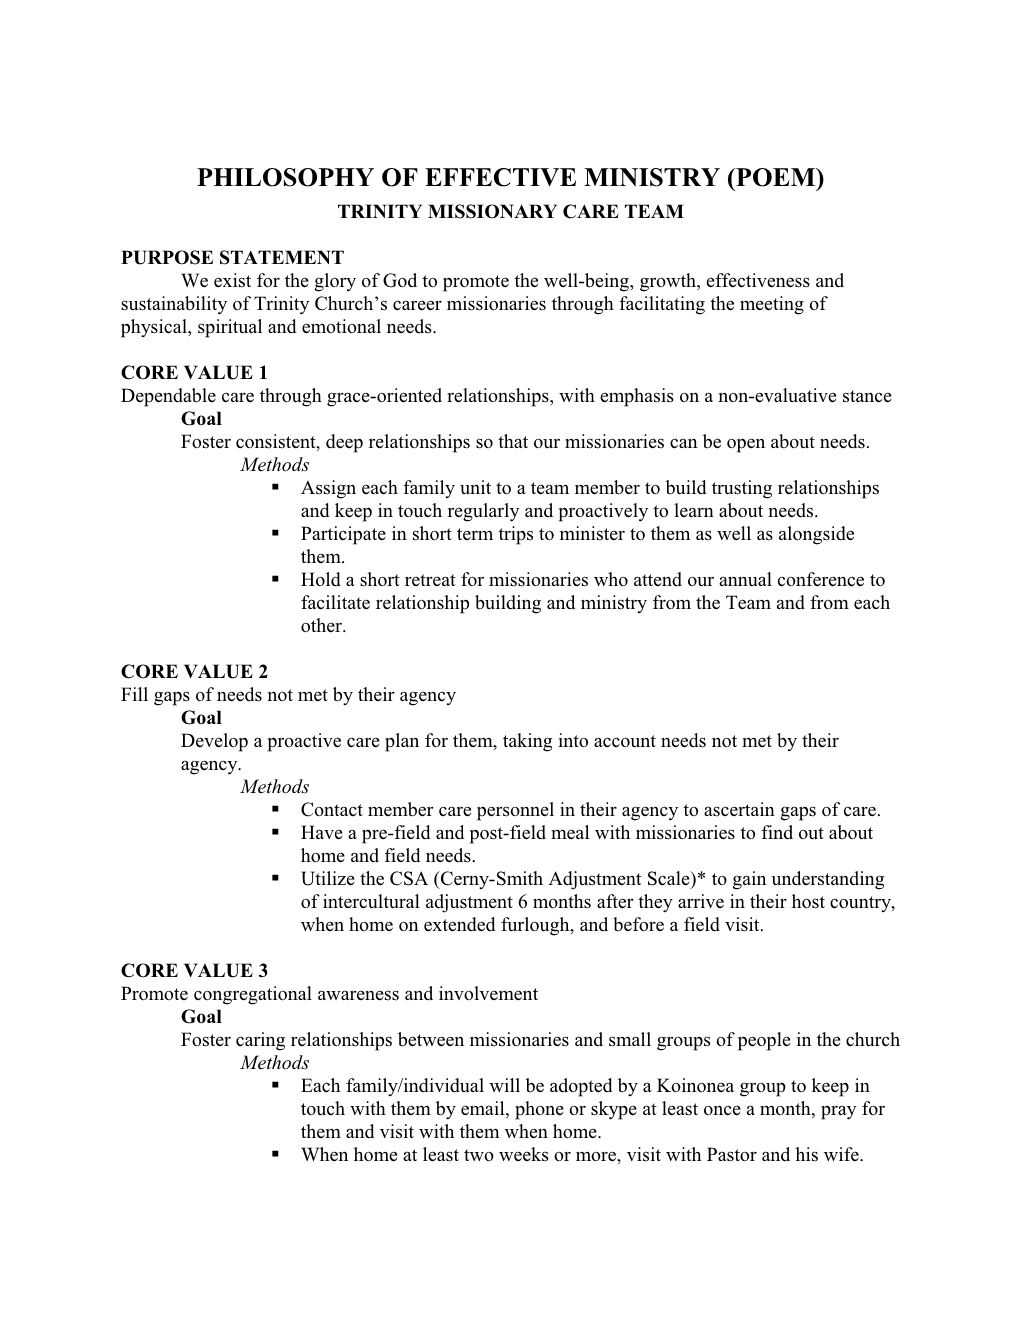 Philosophy of Effective Ministry (Poem)